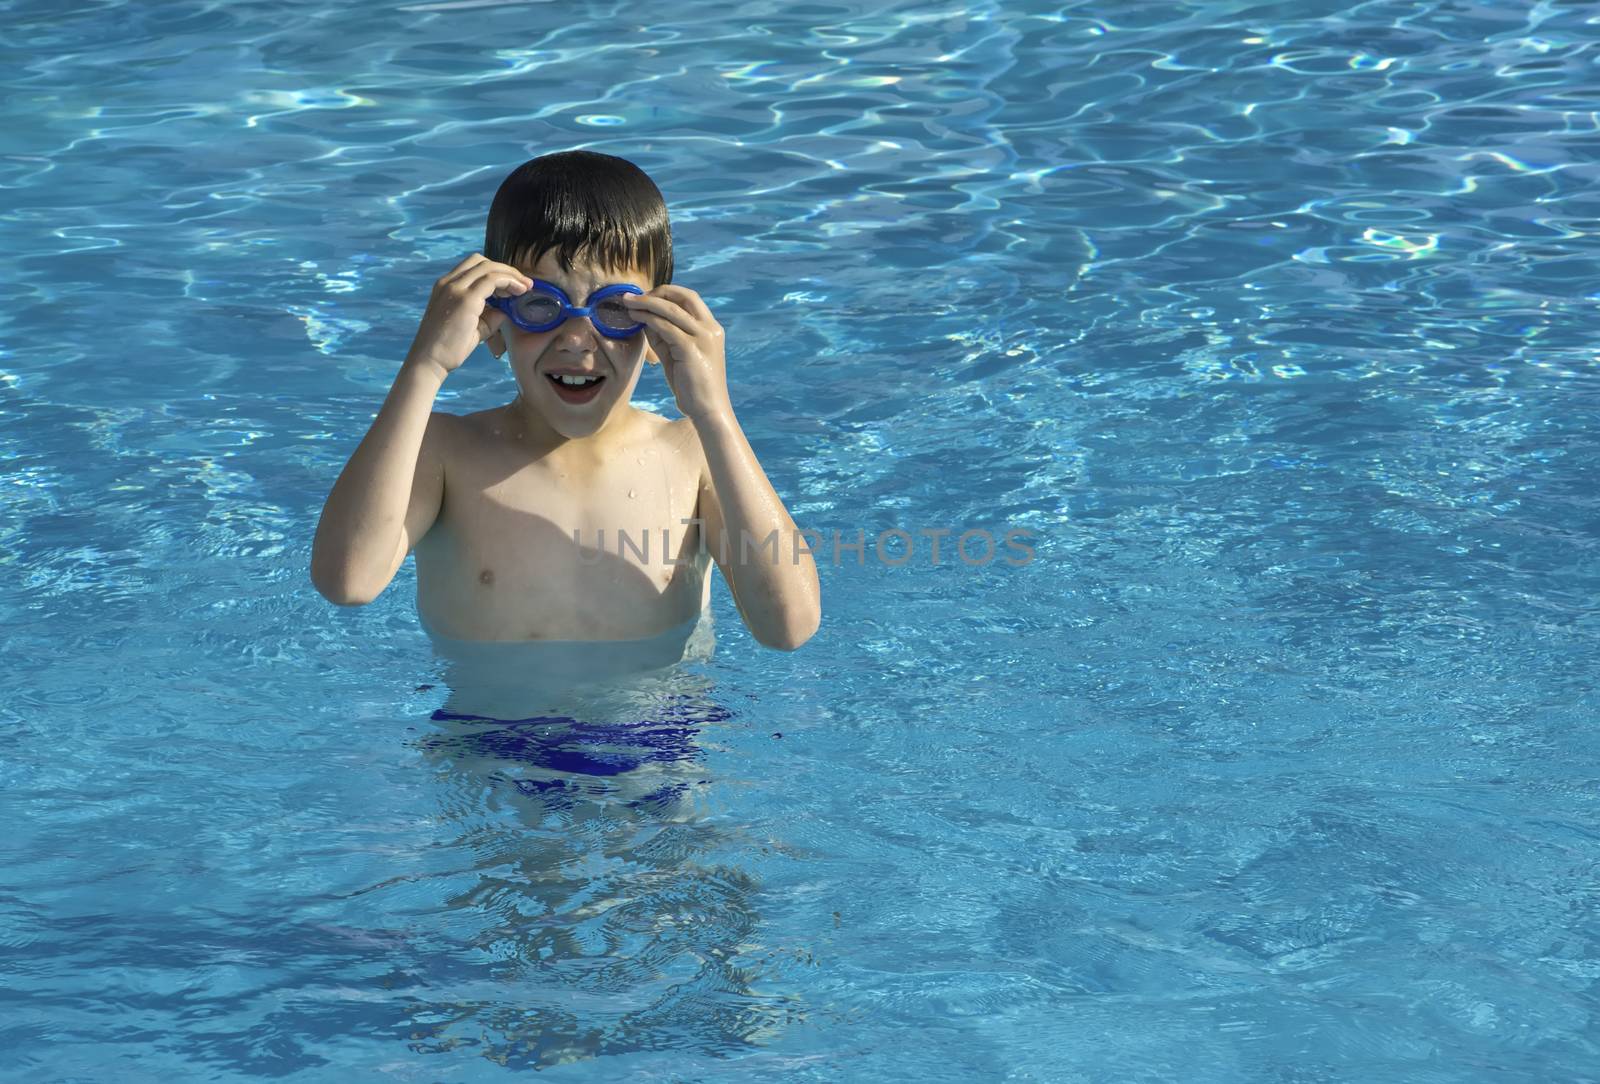 Child in swiming pool. Blue glasses